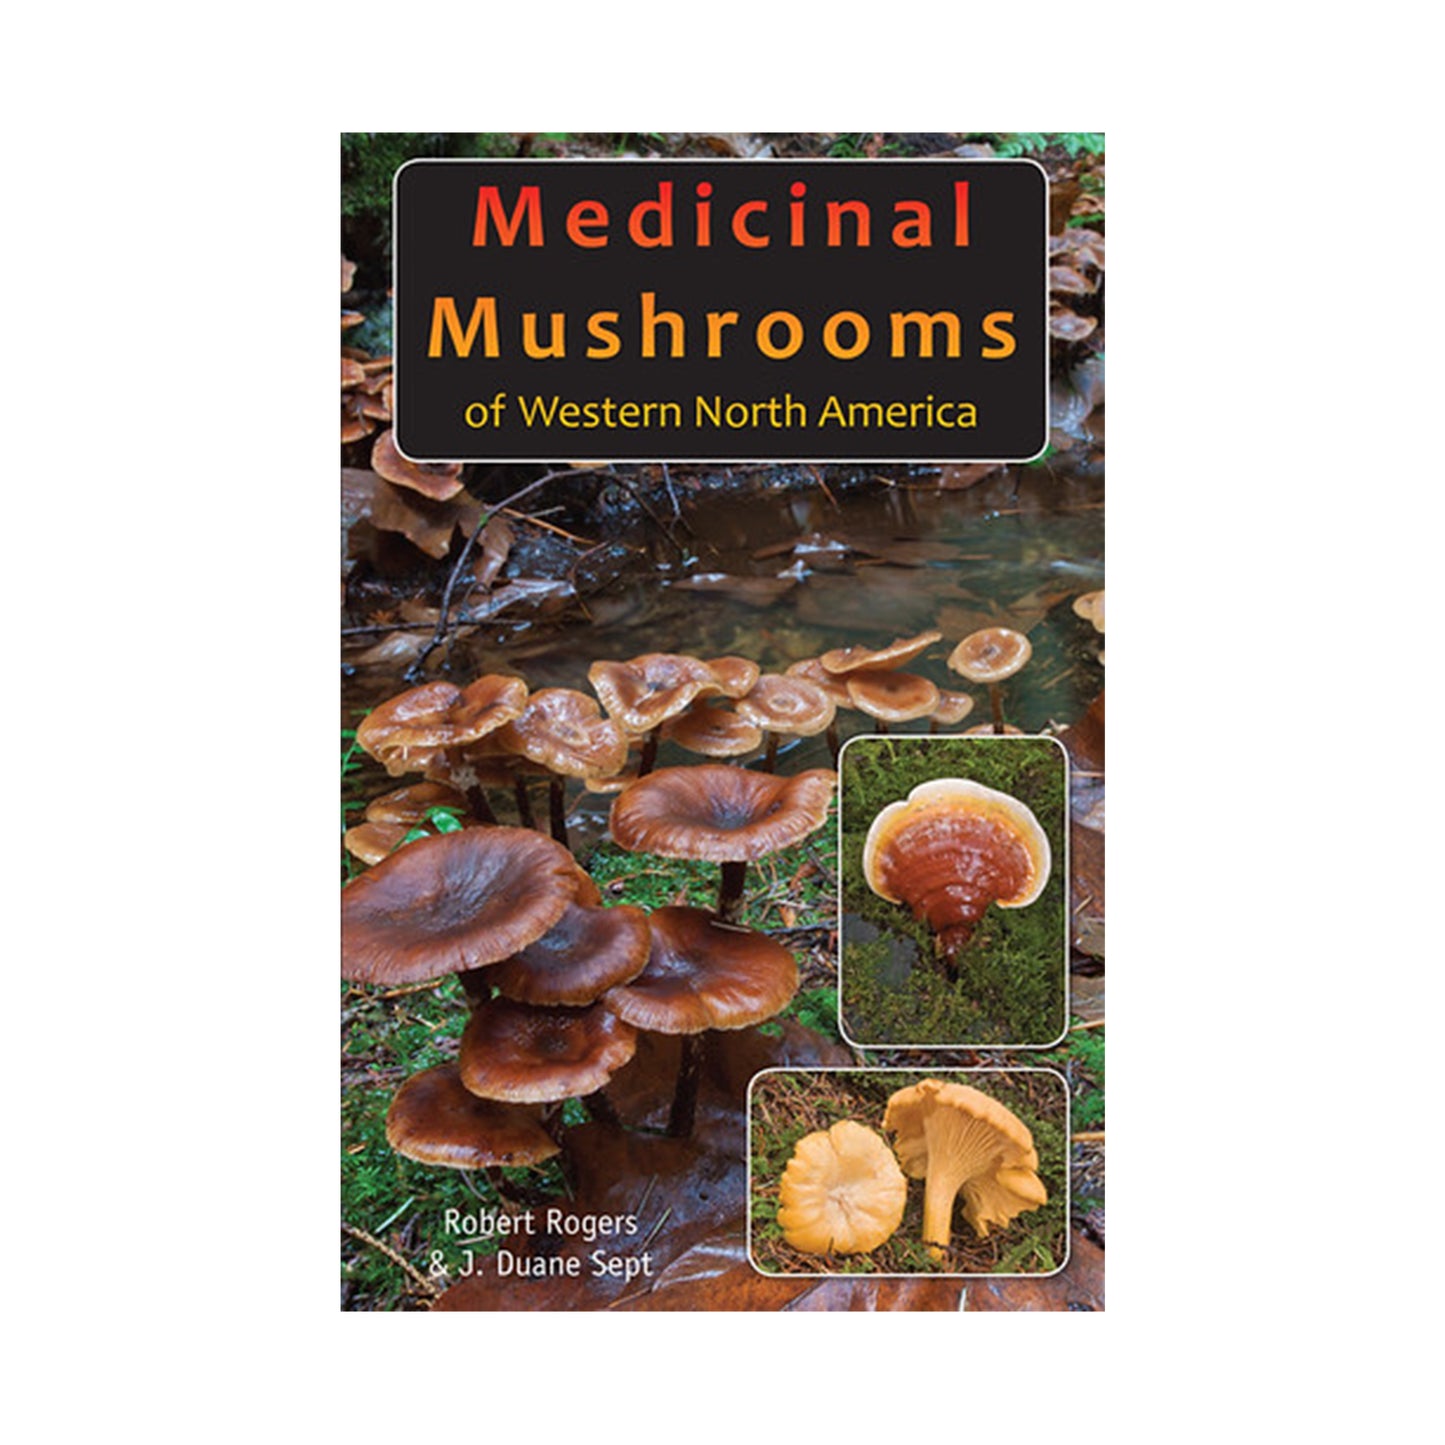 Medicinal Mushrooms of Western North America by Robert Rogers and J Duane Sept